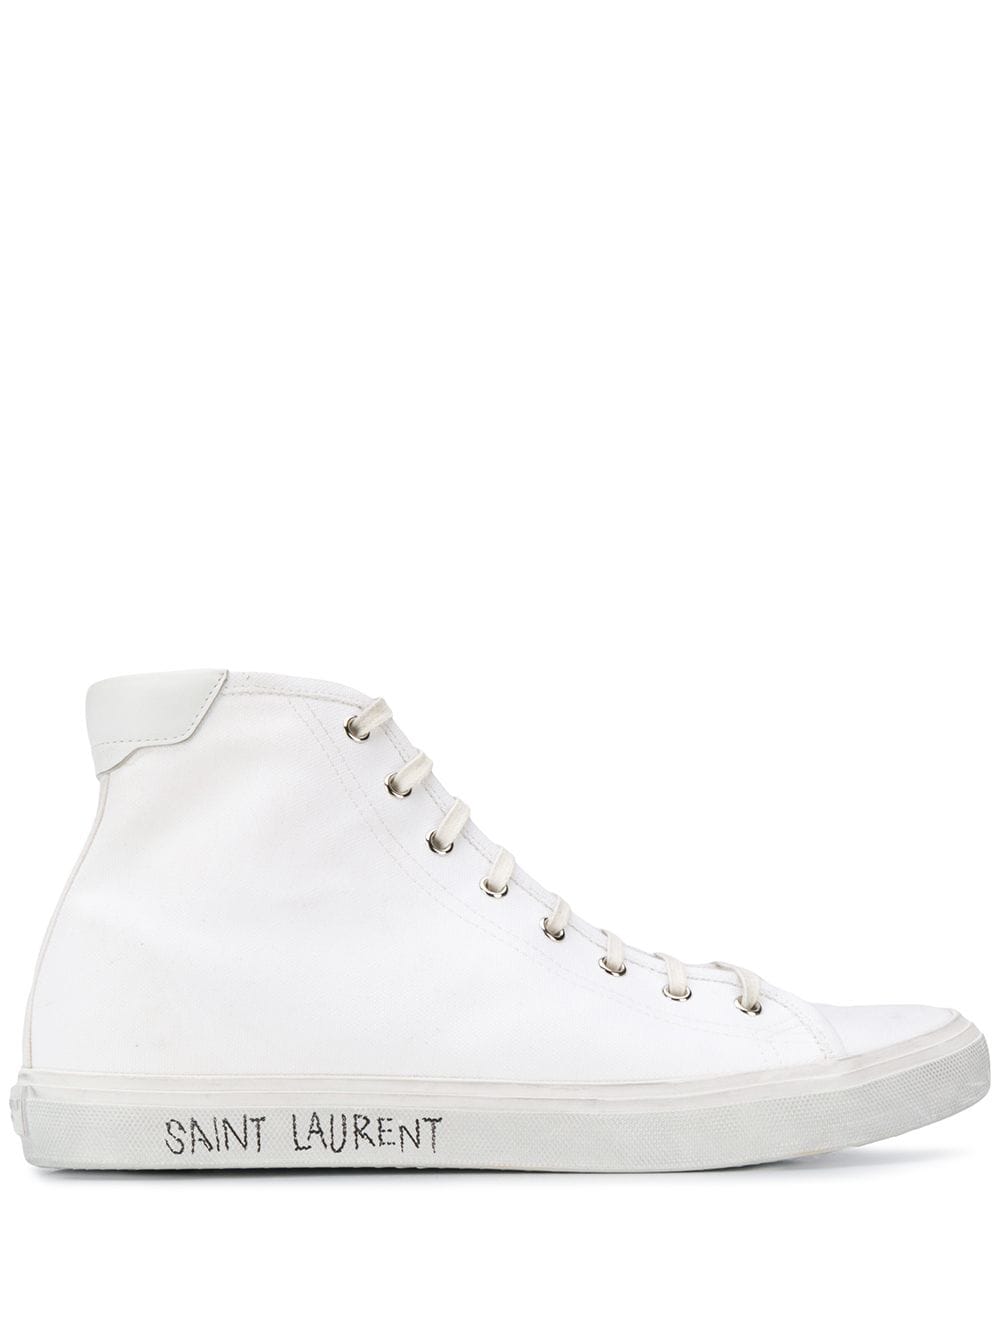 Saint Laurent Malibu high-top sneakers - White von Saint Laurent